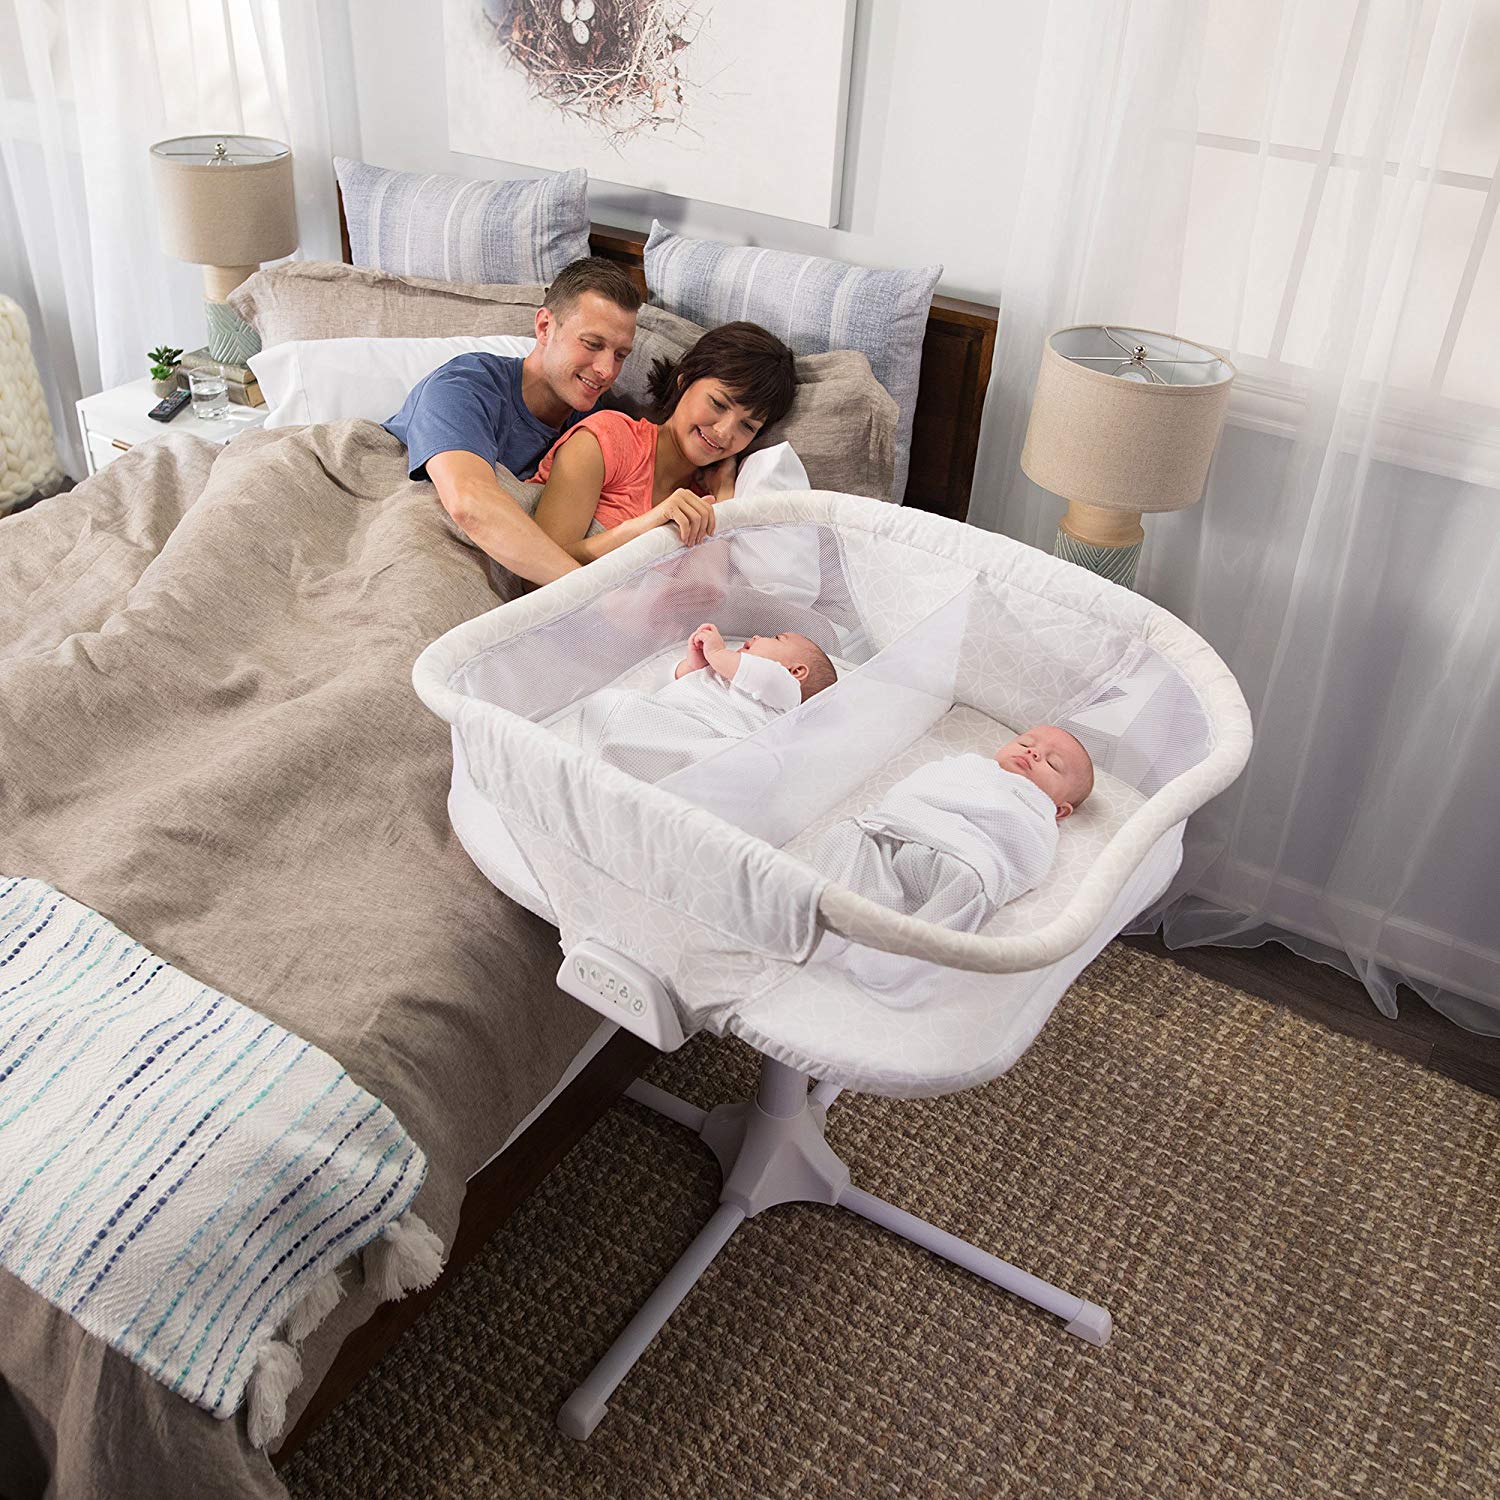 portable crib for twins